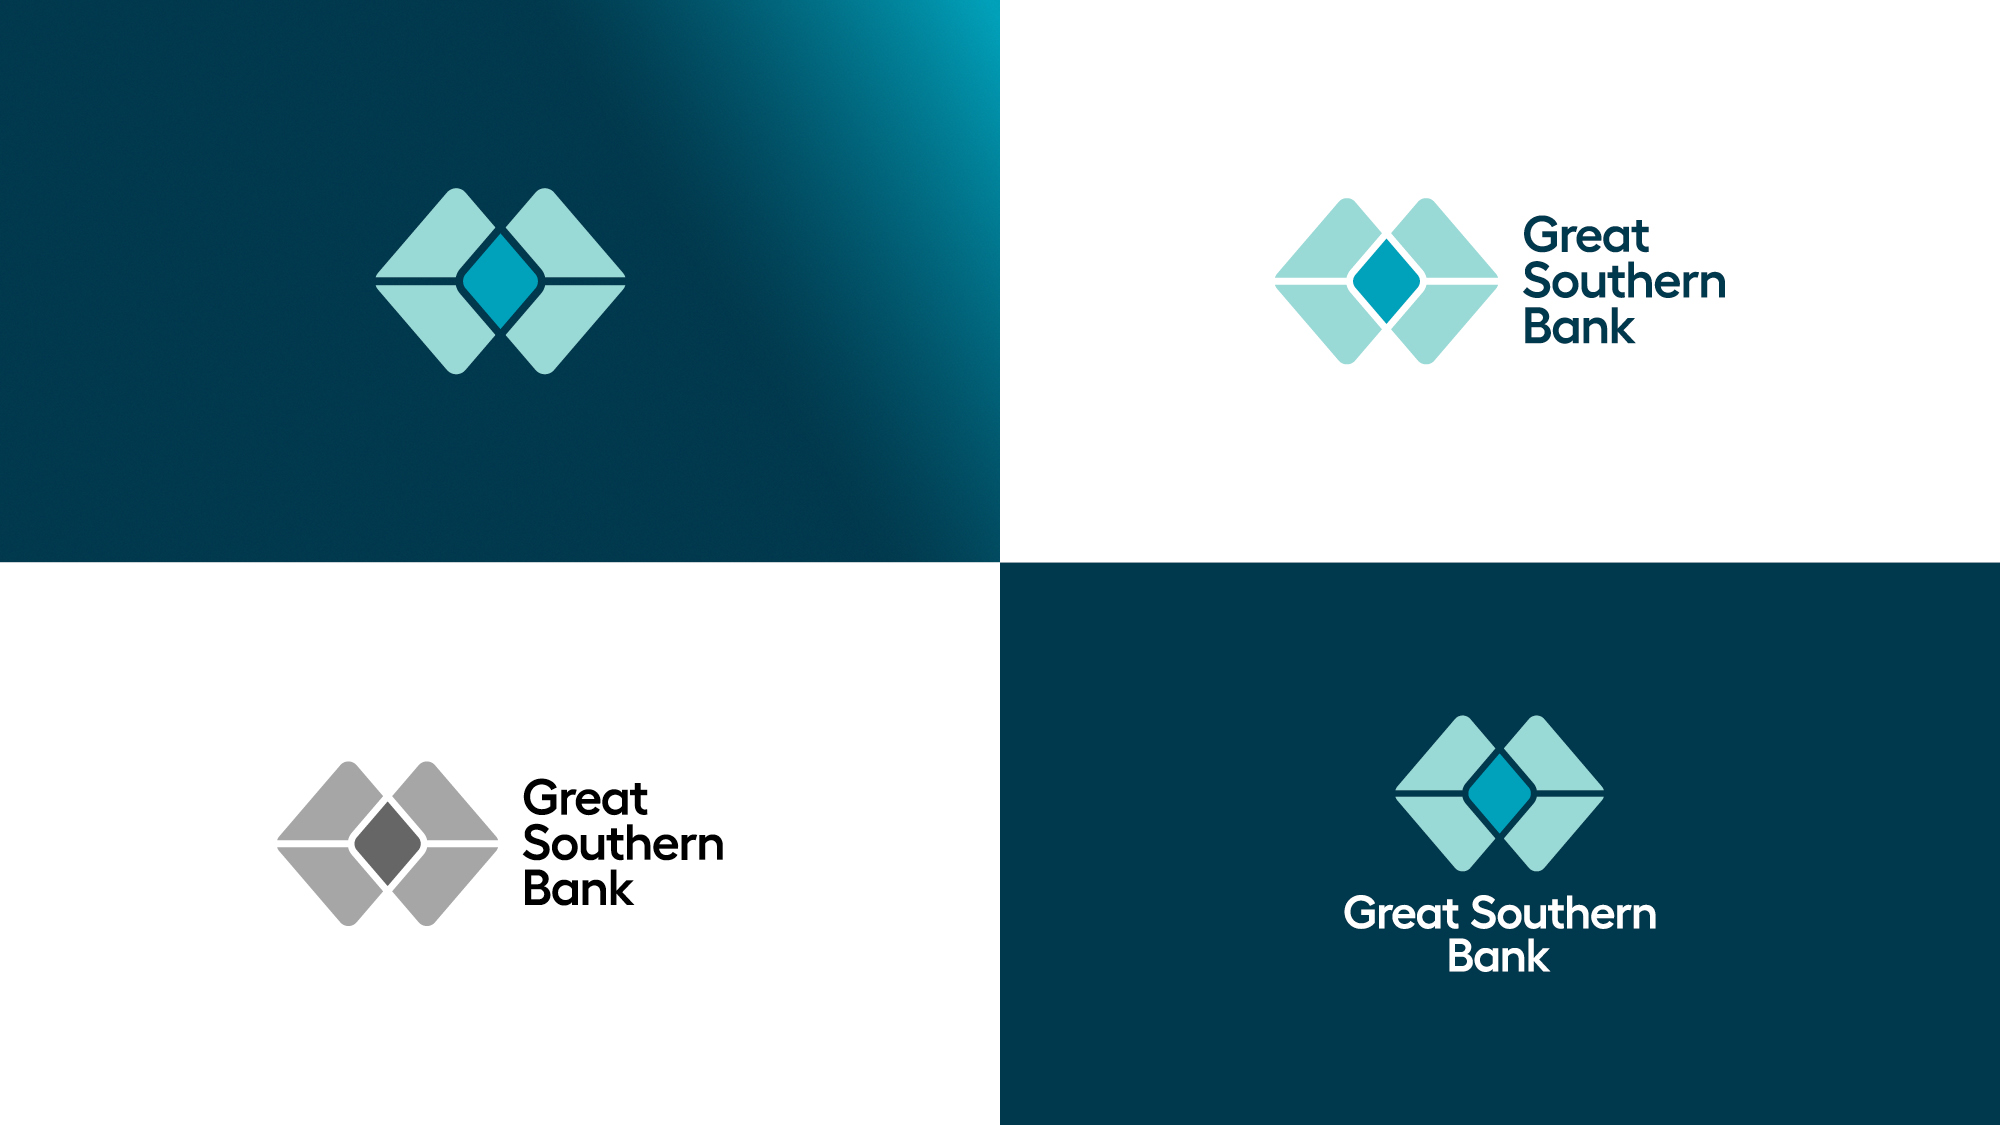 Entity-3-Three-Brand-Design-Agency-Sydney-Great-Southern-Bank-3-brand-identity-logos